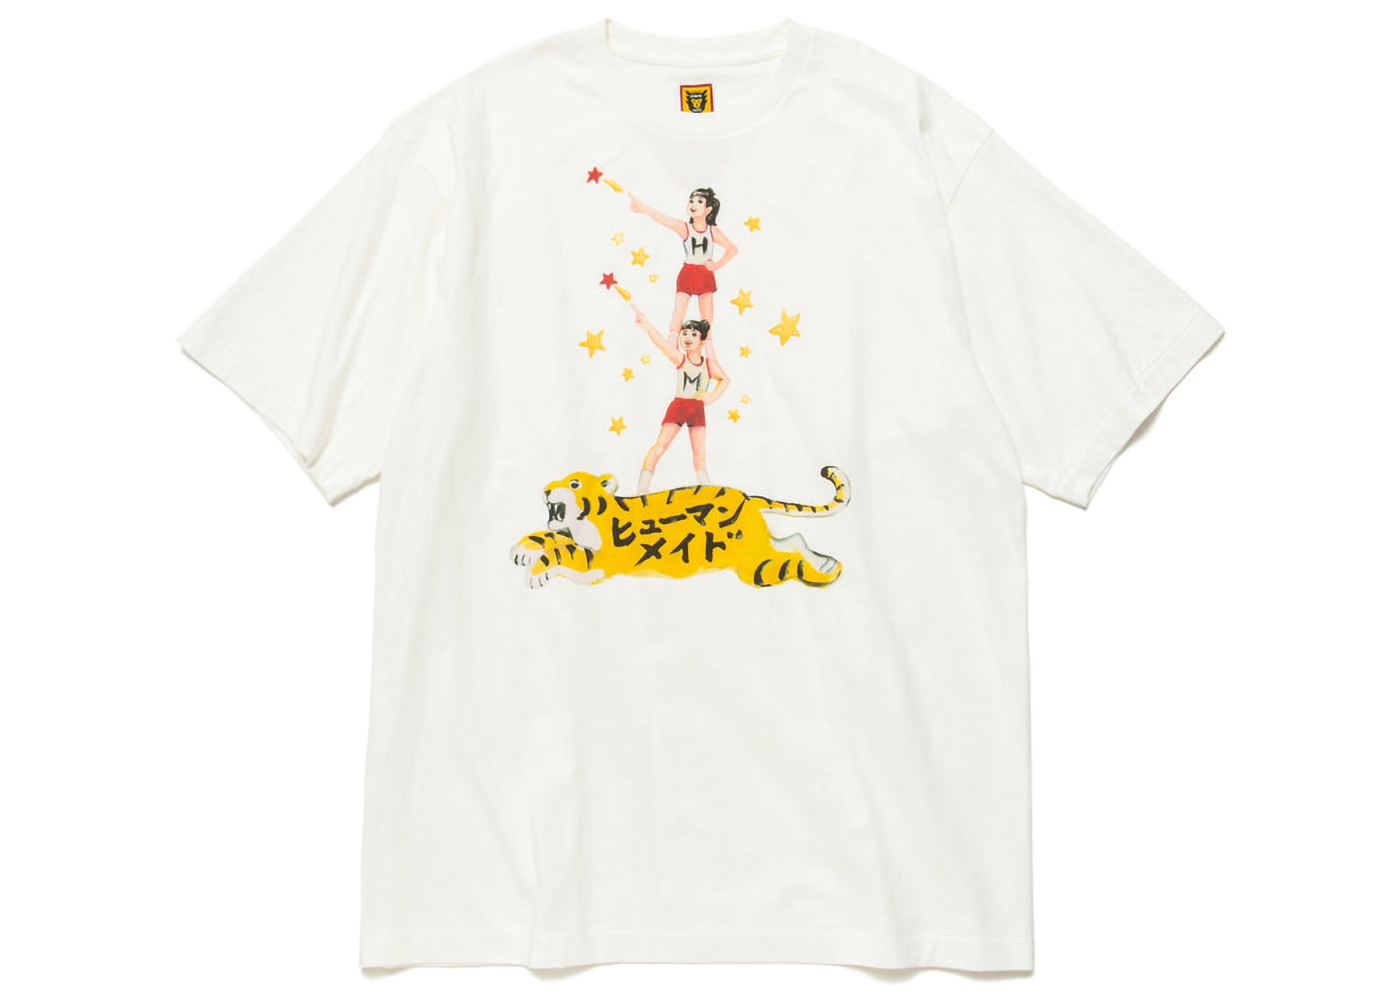 Human Made Keiko Sootome T-shirt